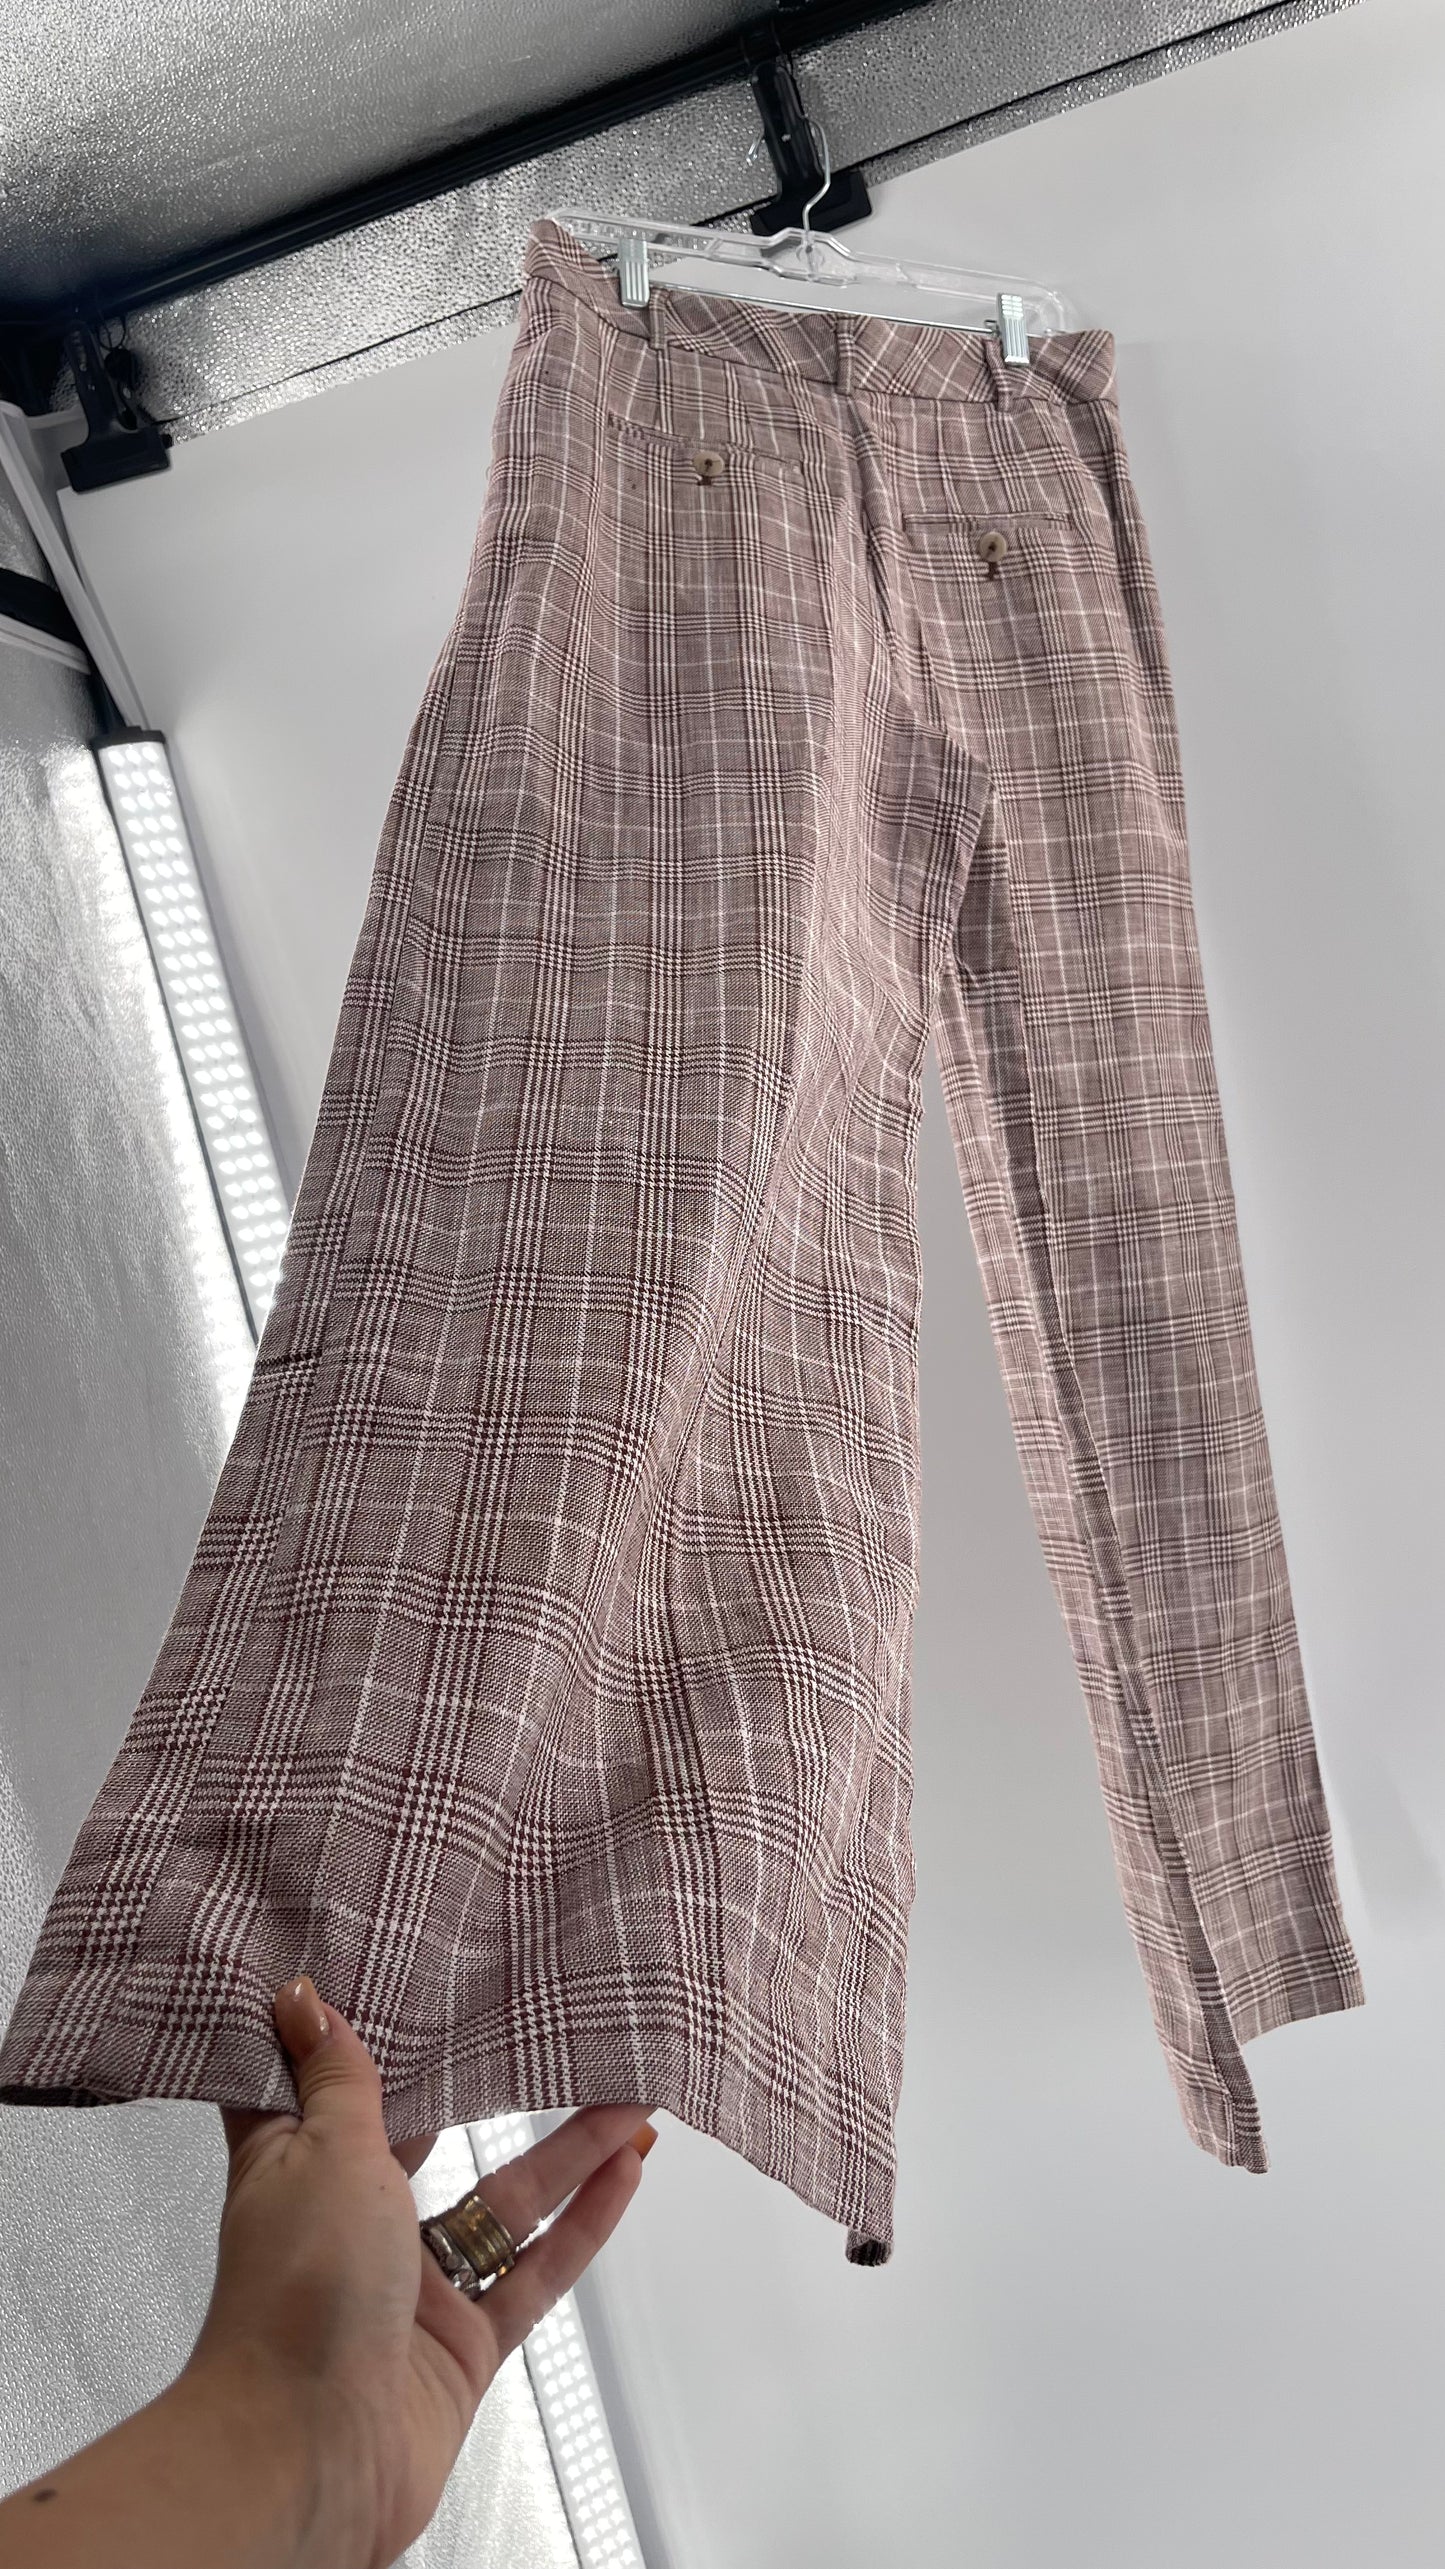 Anthropologie Maeve Brown Plaid Cotton/Linen Trouser (14)